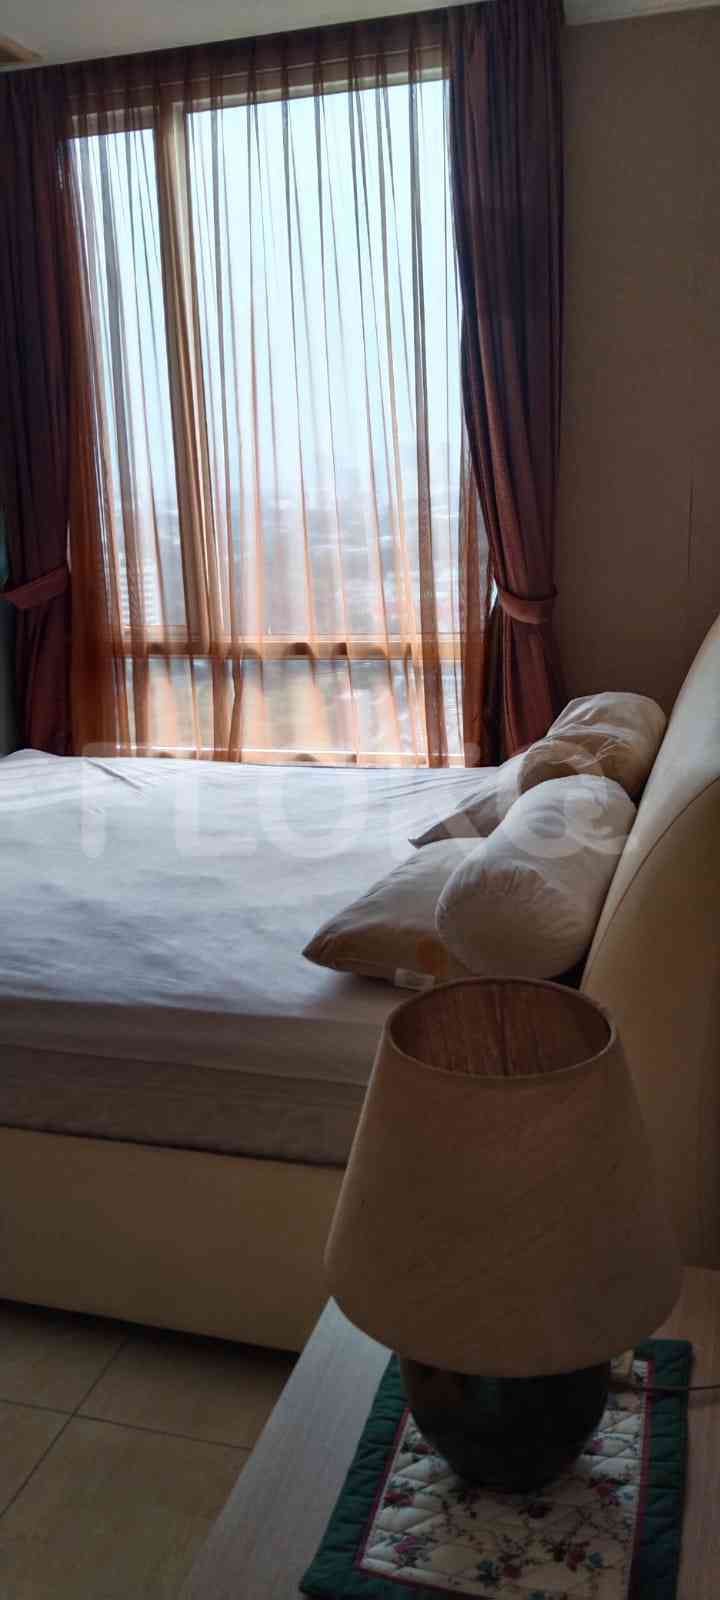 2 Bedroom on 15th Floor for Rent in FX Residence - fsu559 10